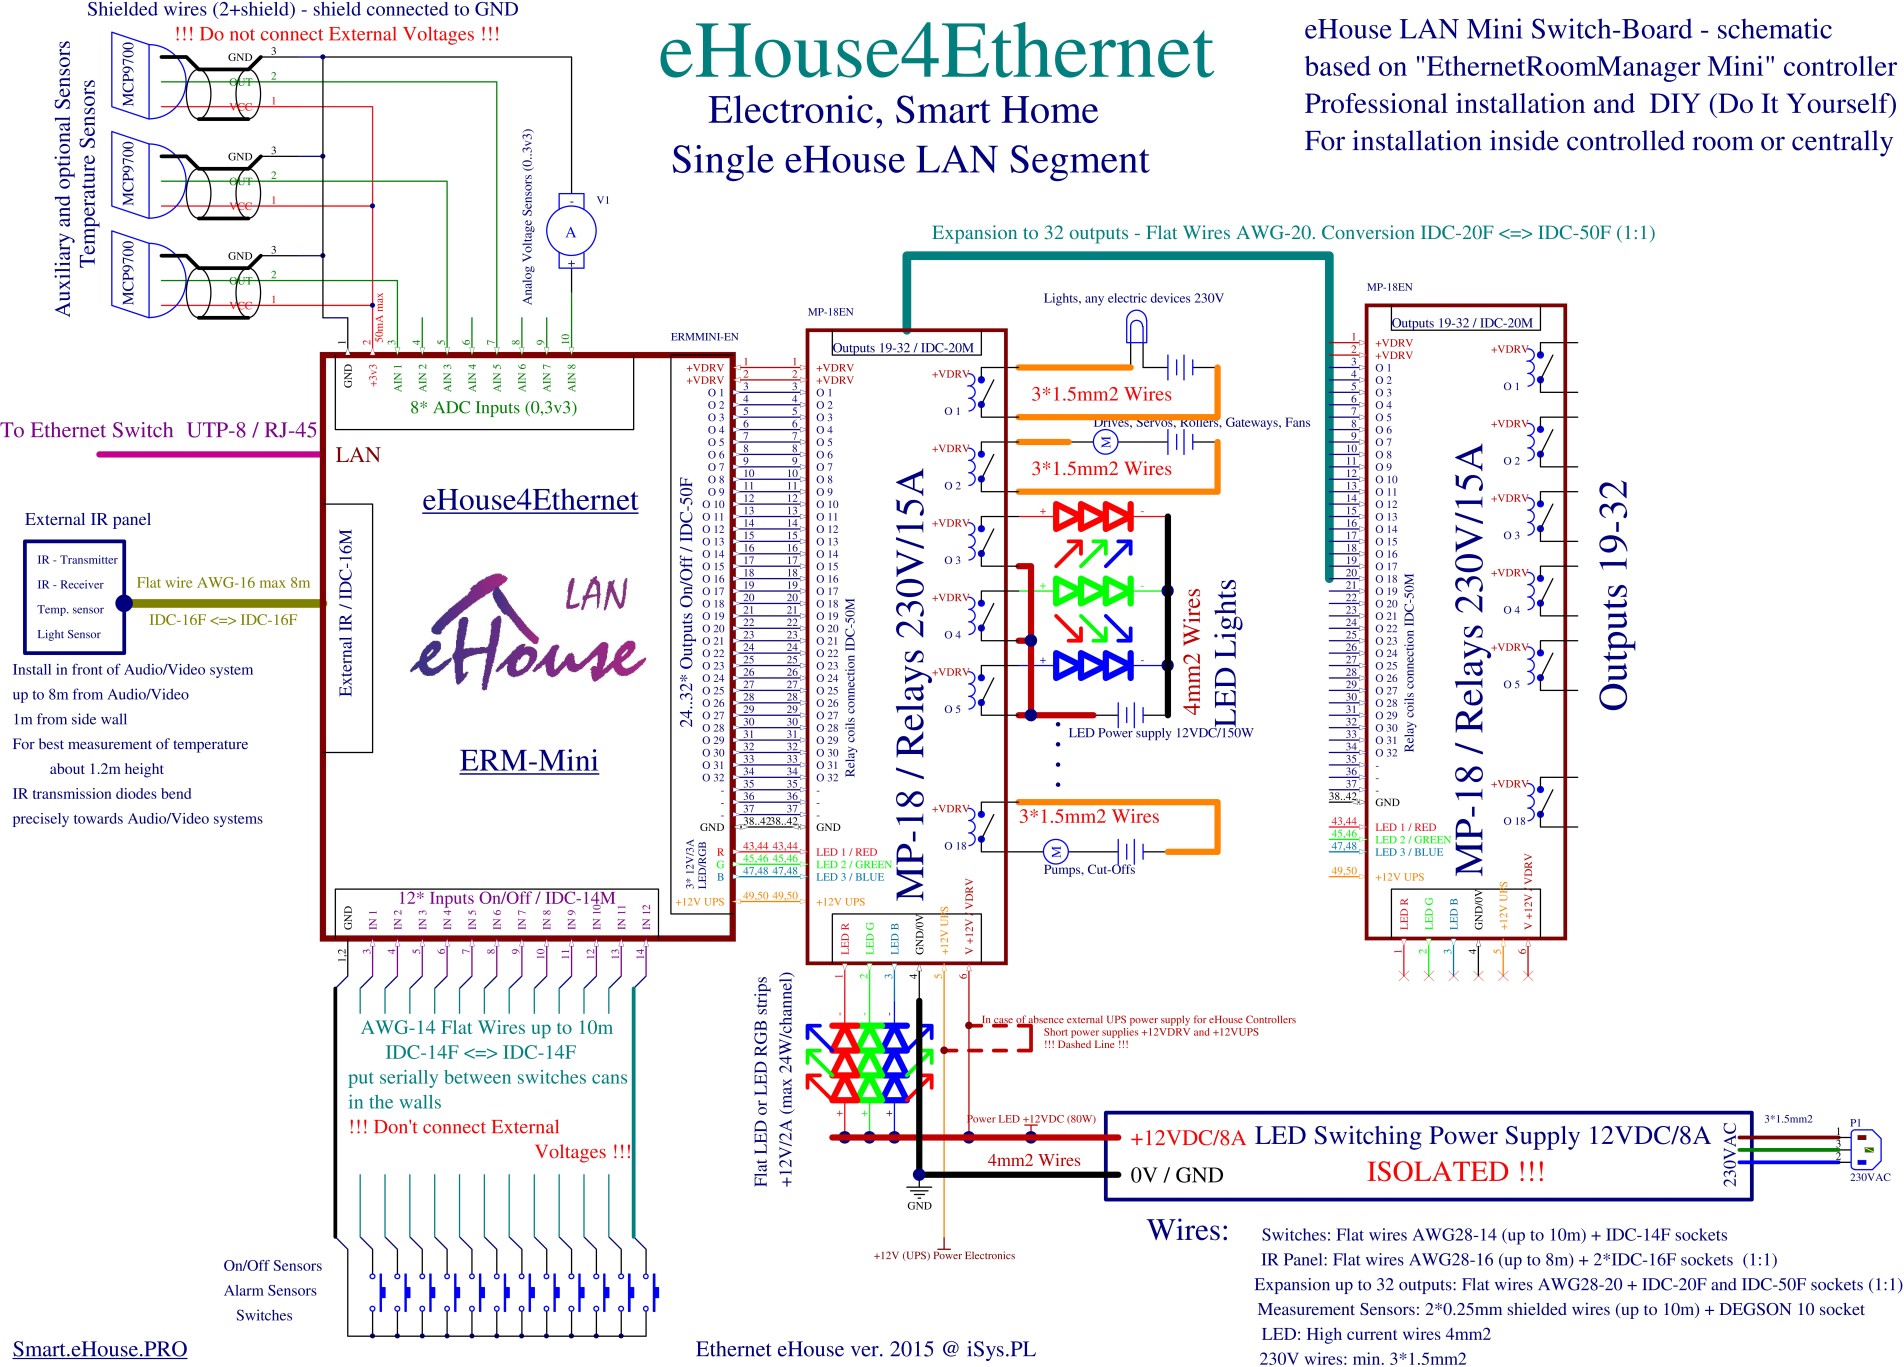  intelligent home eHouse LAN - Mini Mini ERM switching scheme 